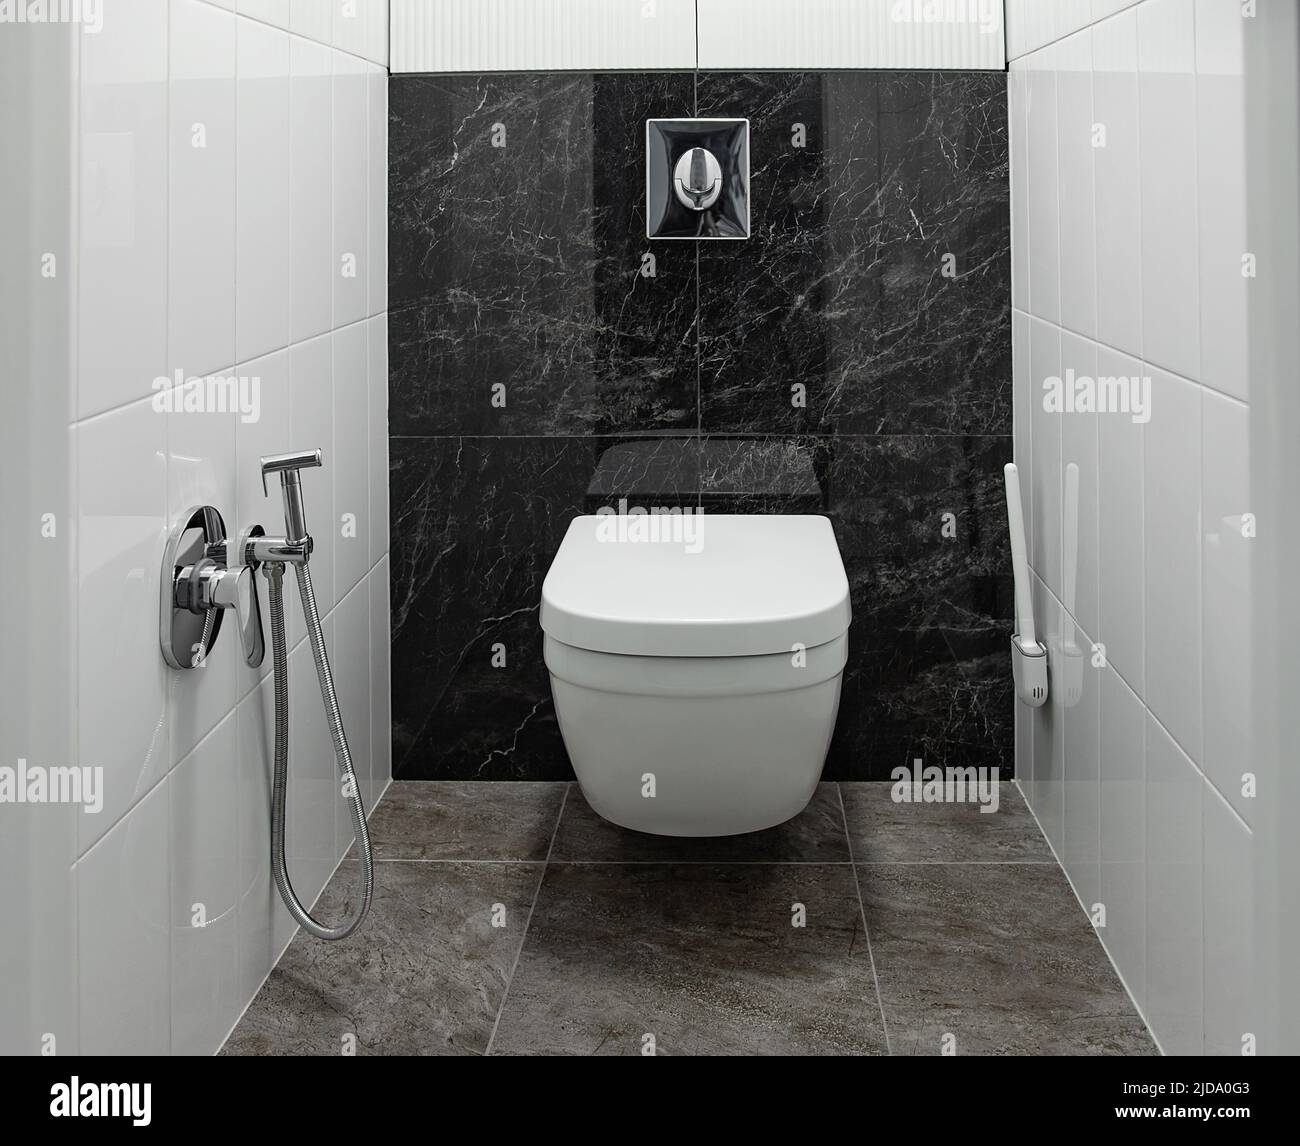 Toilet room interior loft style design in white and black color Stock Photo